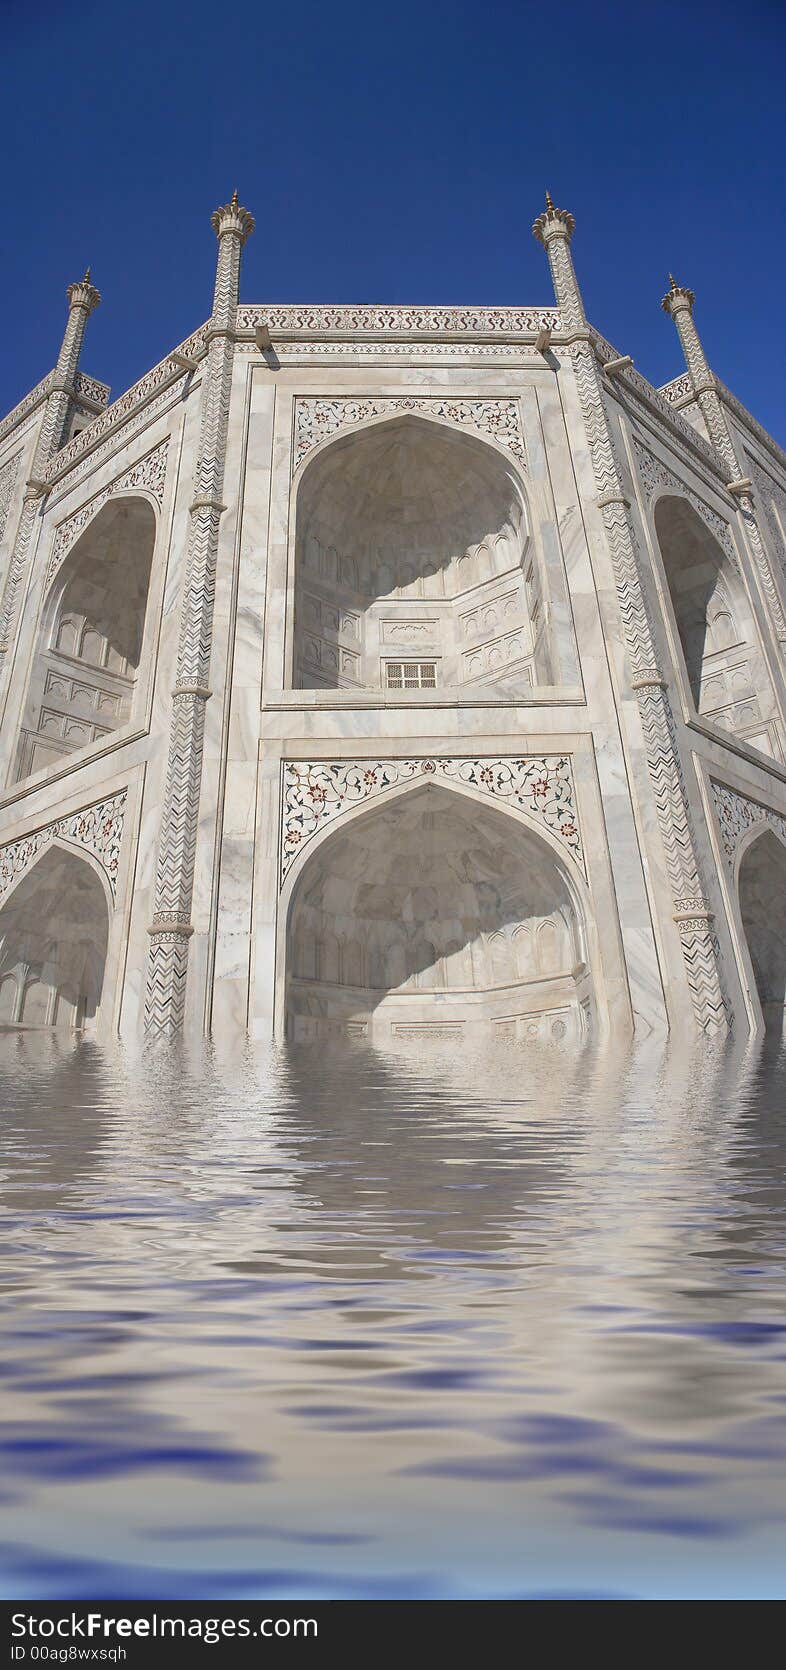 Taj Mahal reflections in artificial water